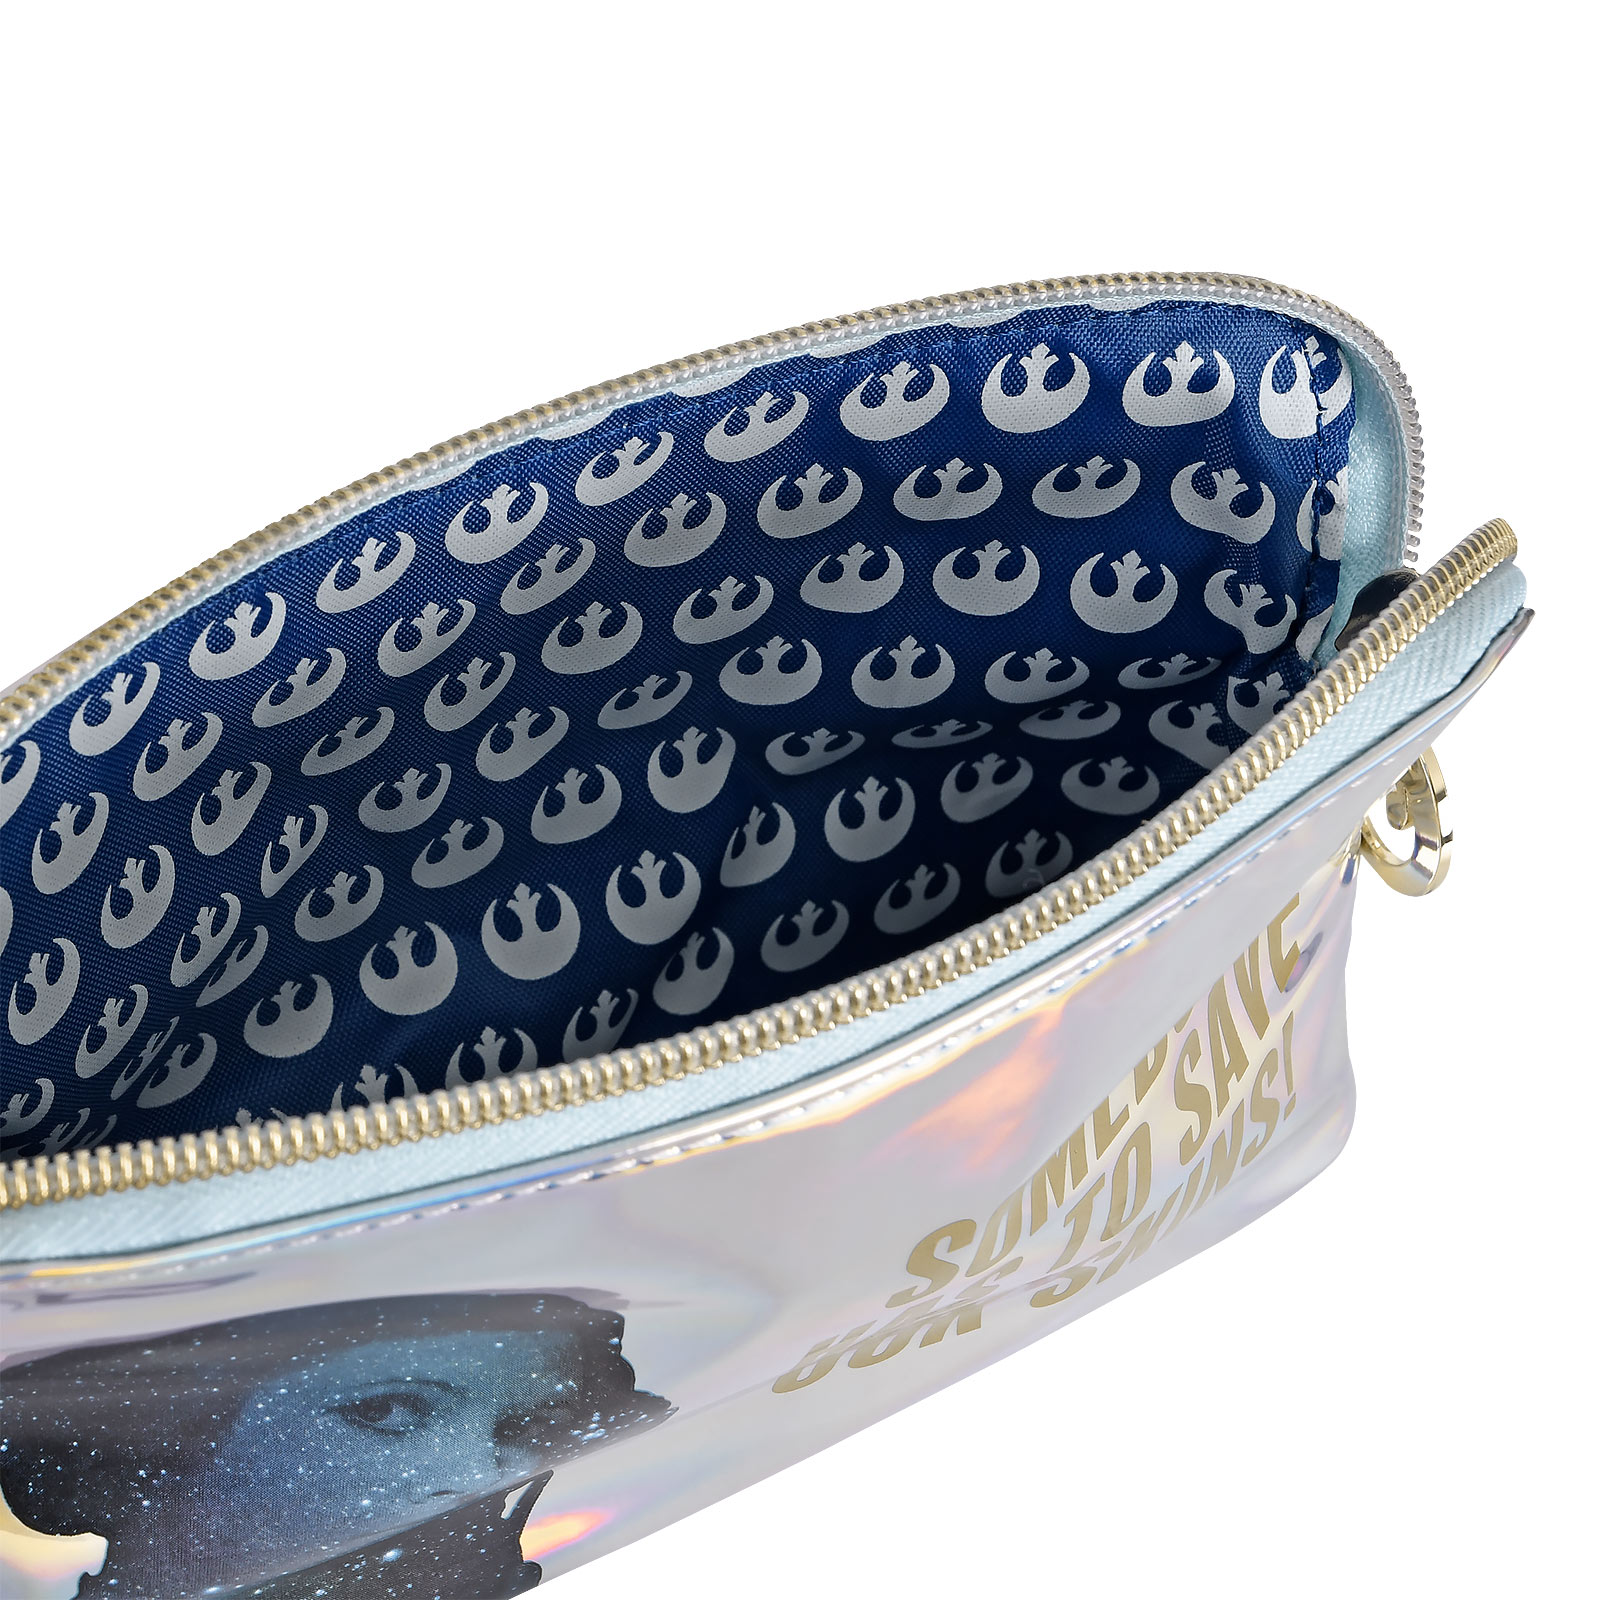 Star Wars - Leia Holo Cosmetic Bag